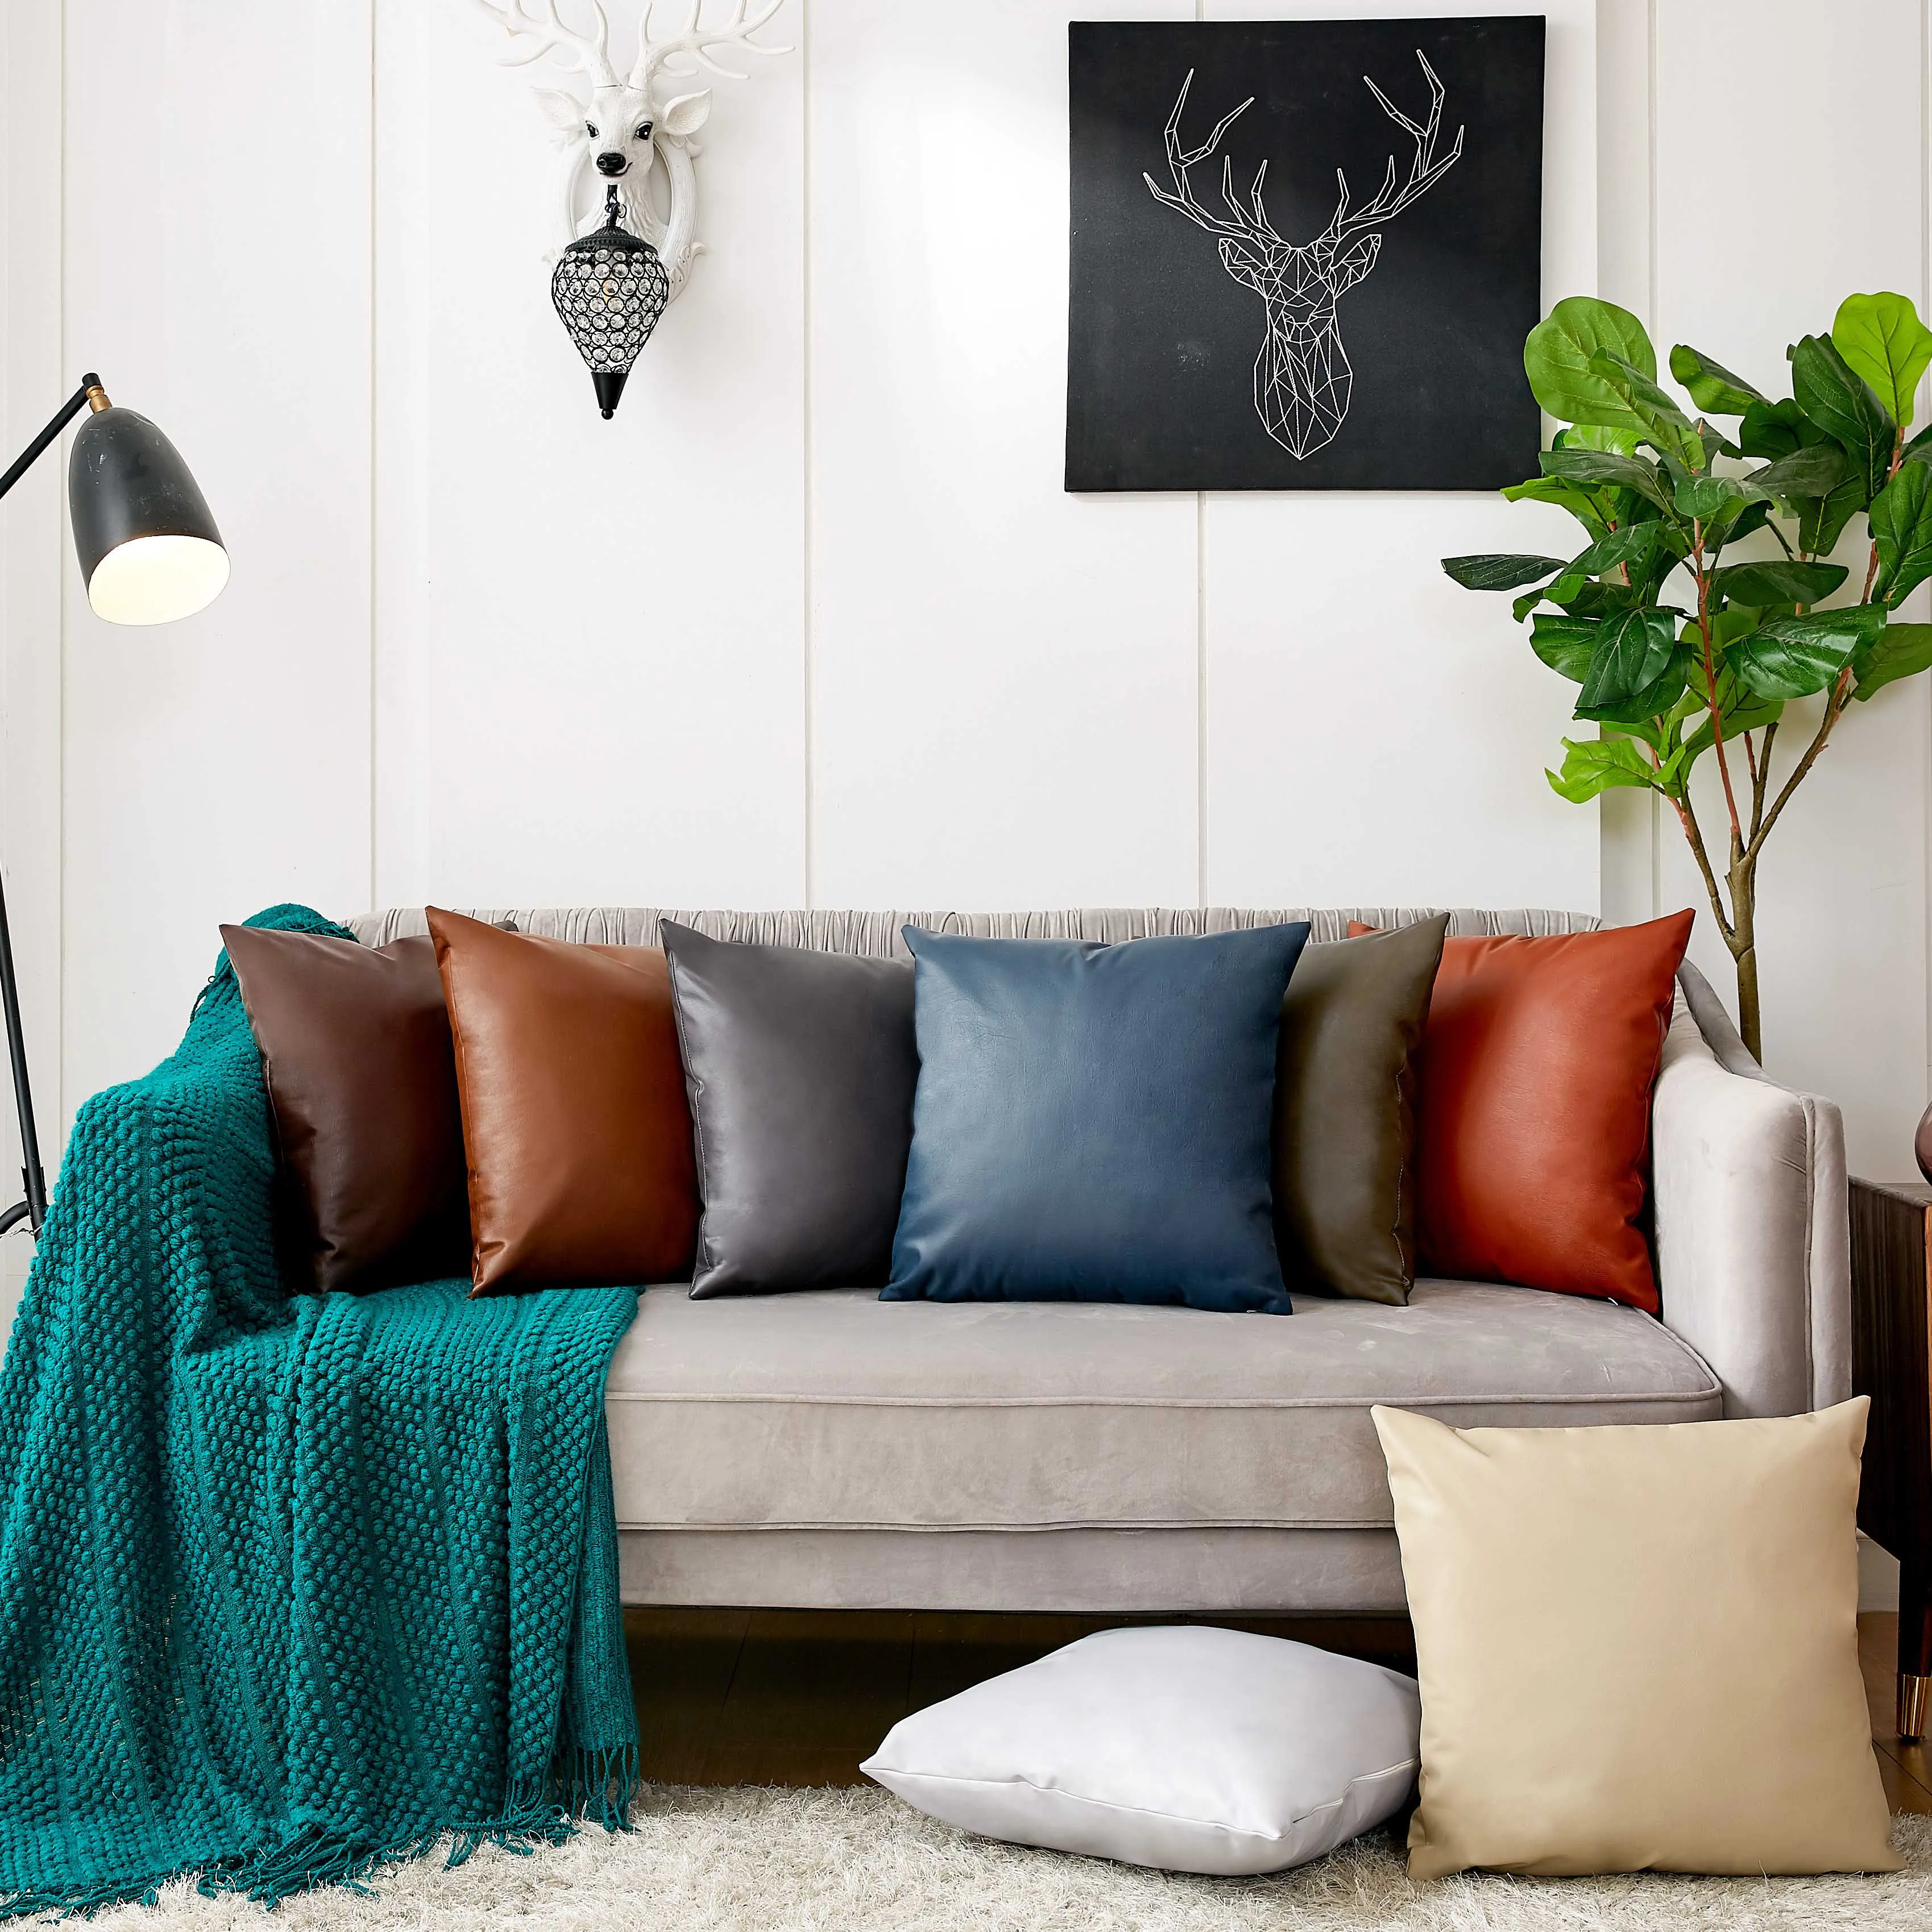 Pillow Home Decor Funda Cojin Sofa Living Room Car Home Decor Imitation Leather Cushion Cover 45x45cm Throw Pillows Decorative